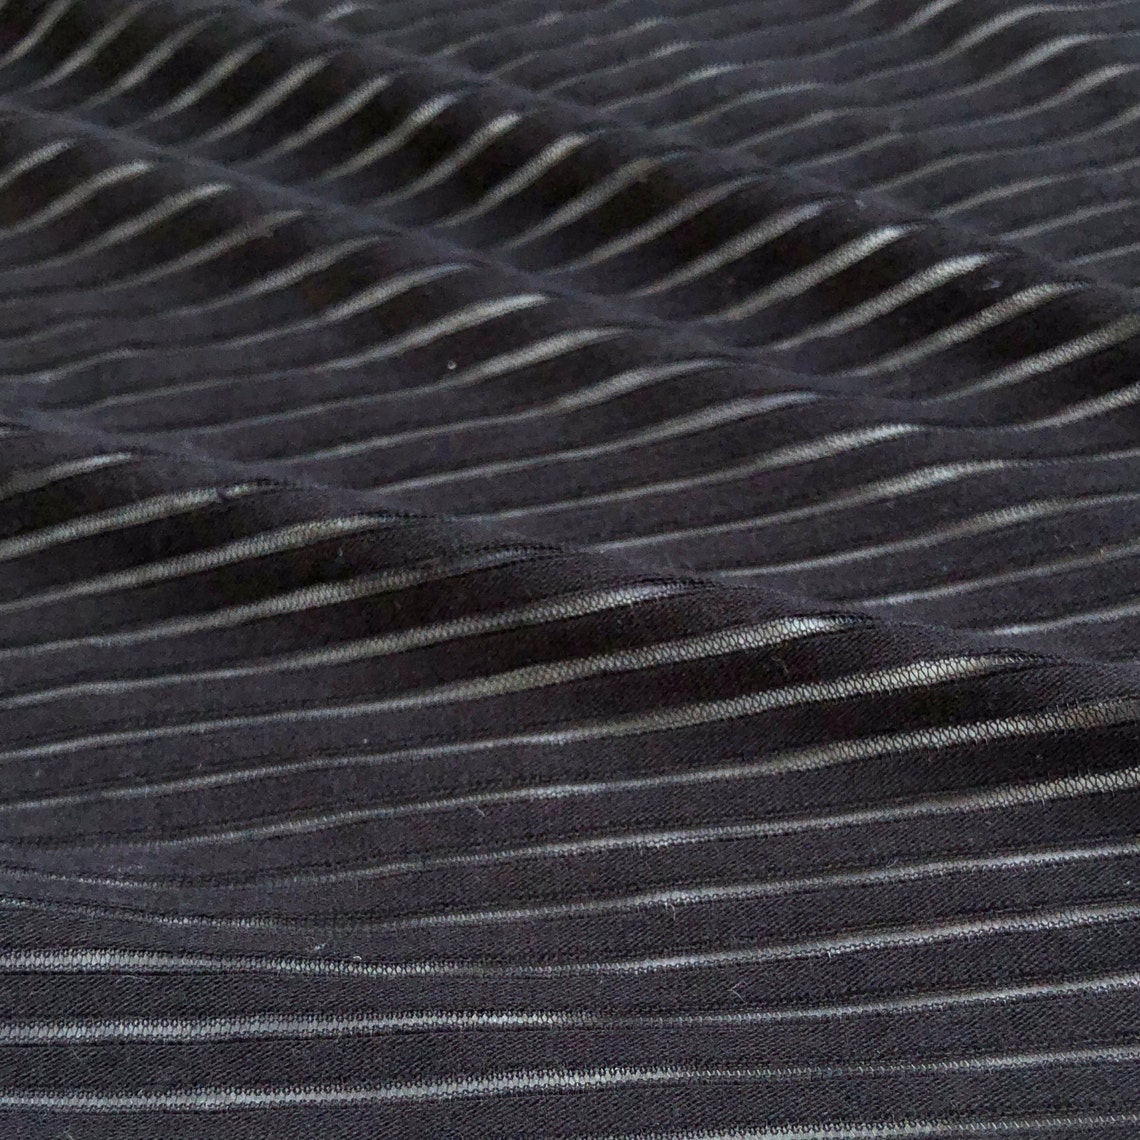 60 Modal & Spandex Lycra Stretch Black Striped Knit | Etsy